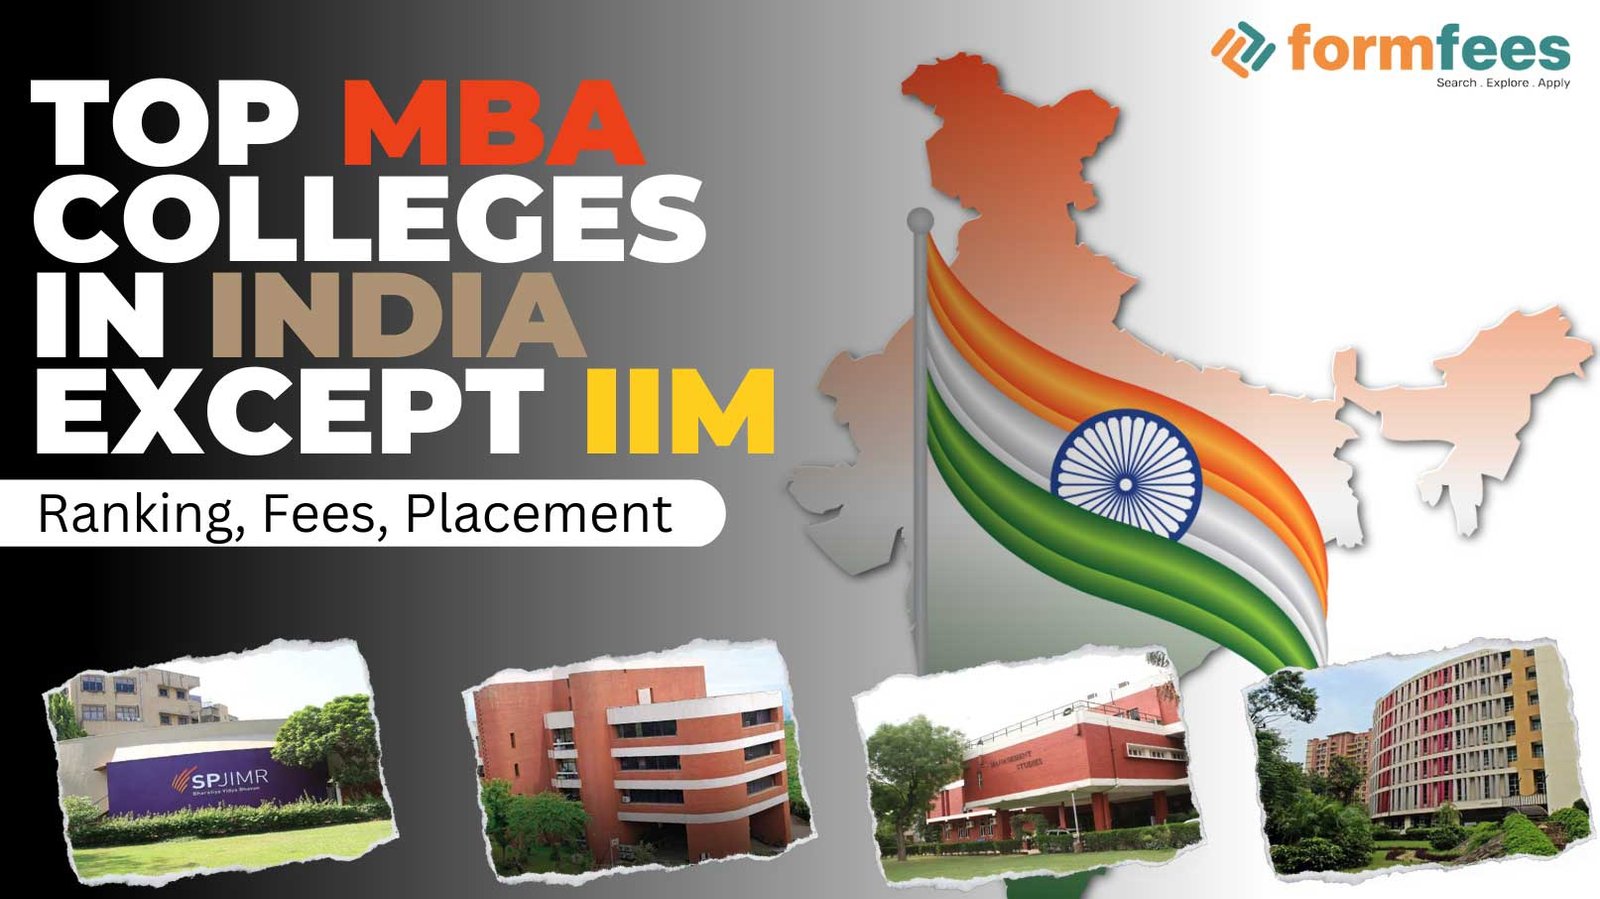 Top MBA Colleges in India Except IIM